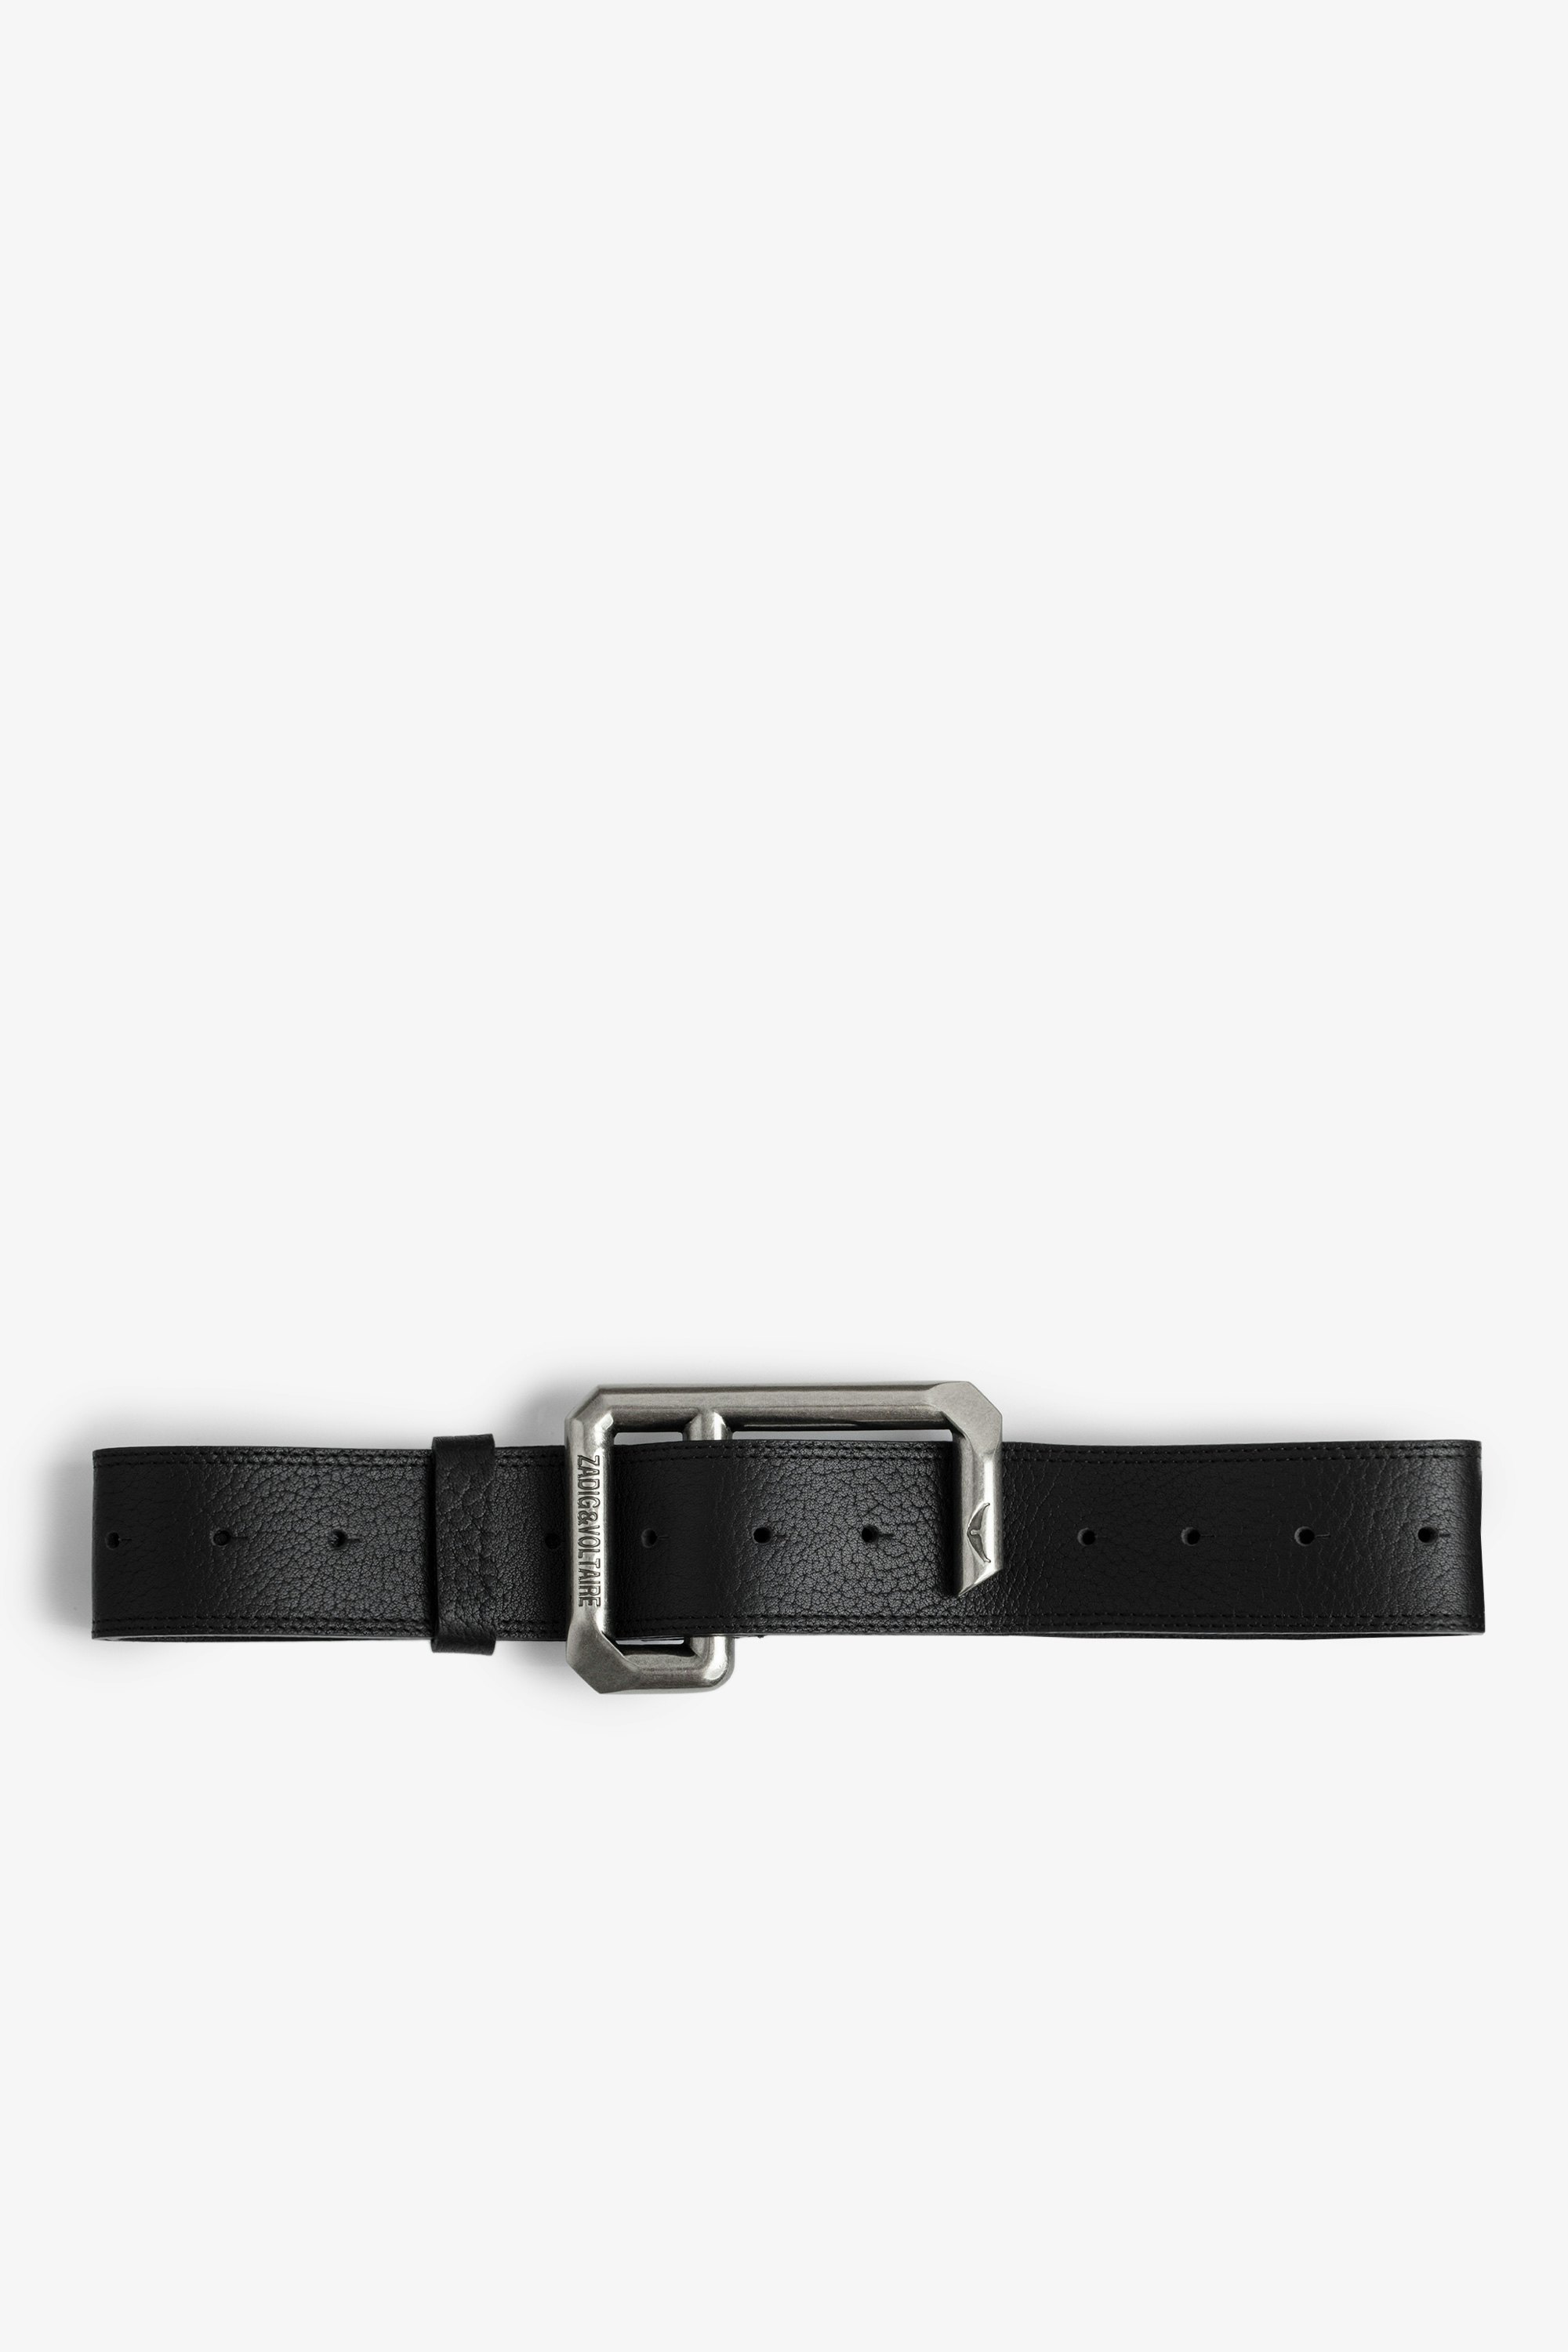 La Cecilia 50 mm Belt Women's adjustable black leather belt with C-shaped buckle.